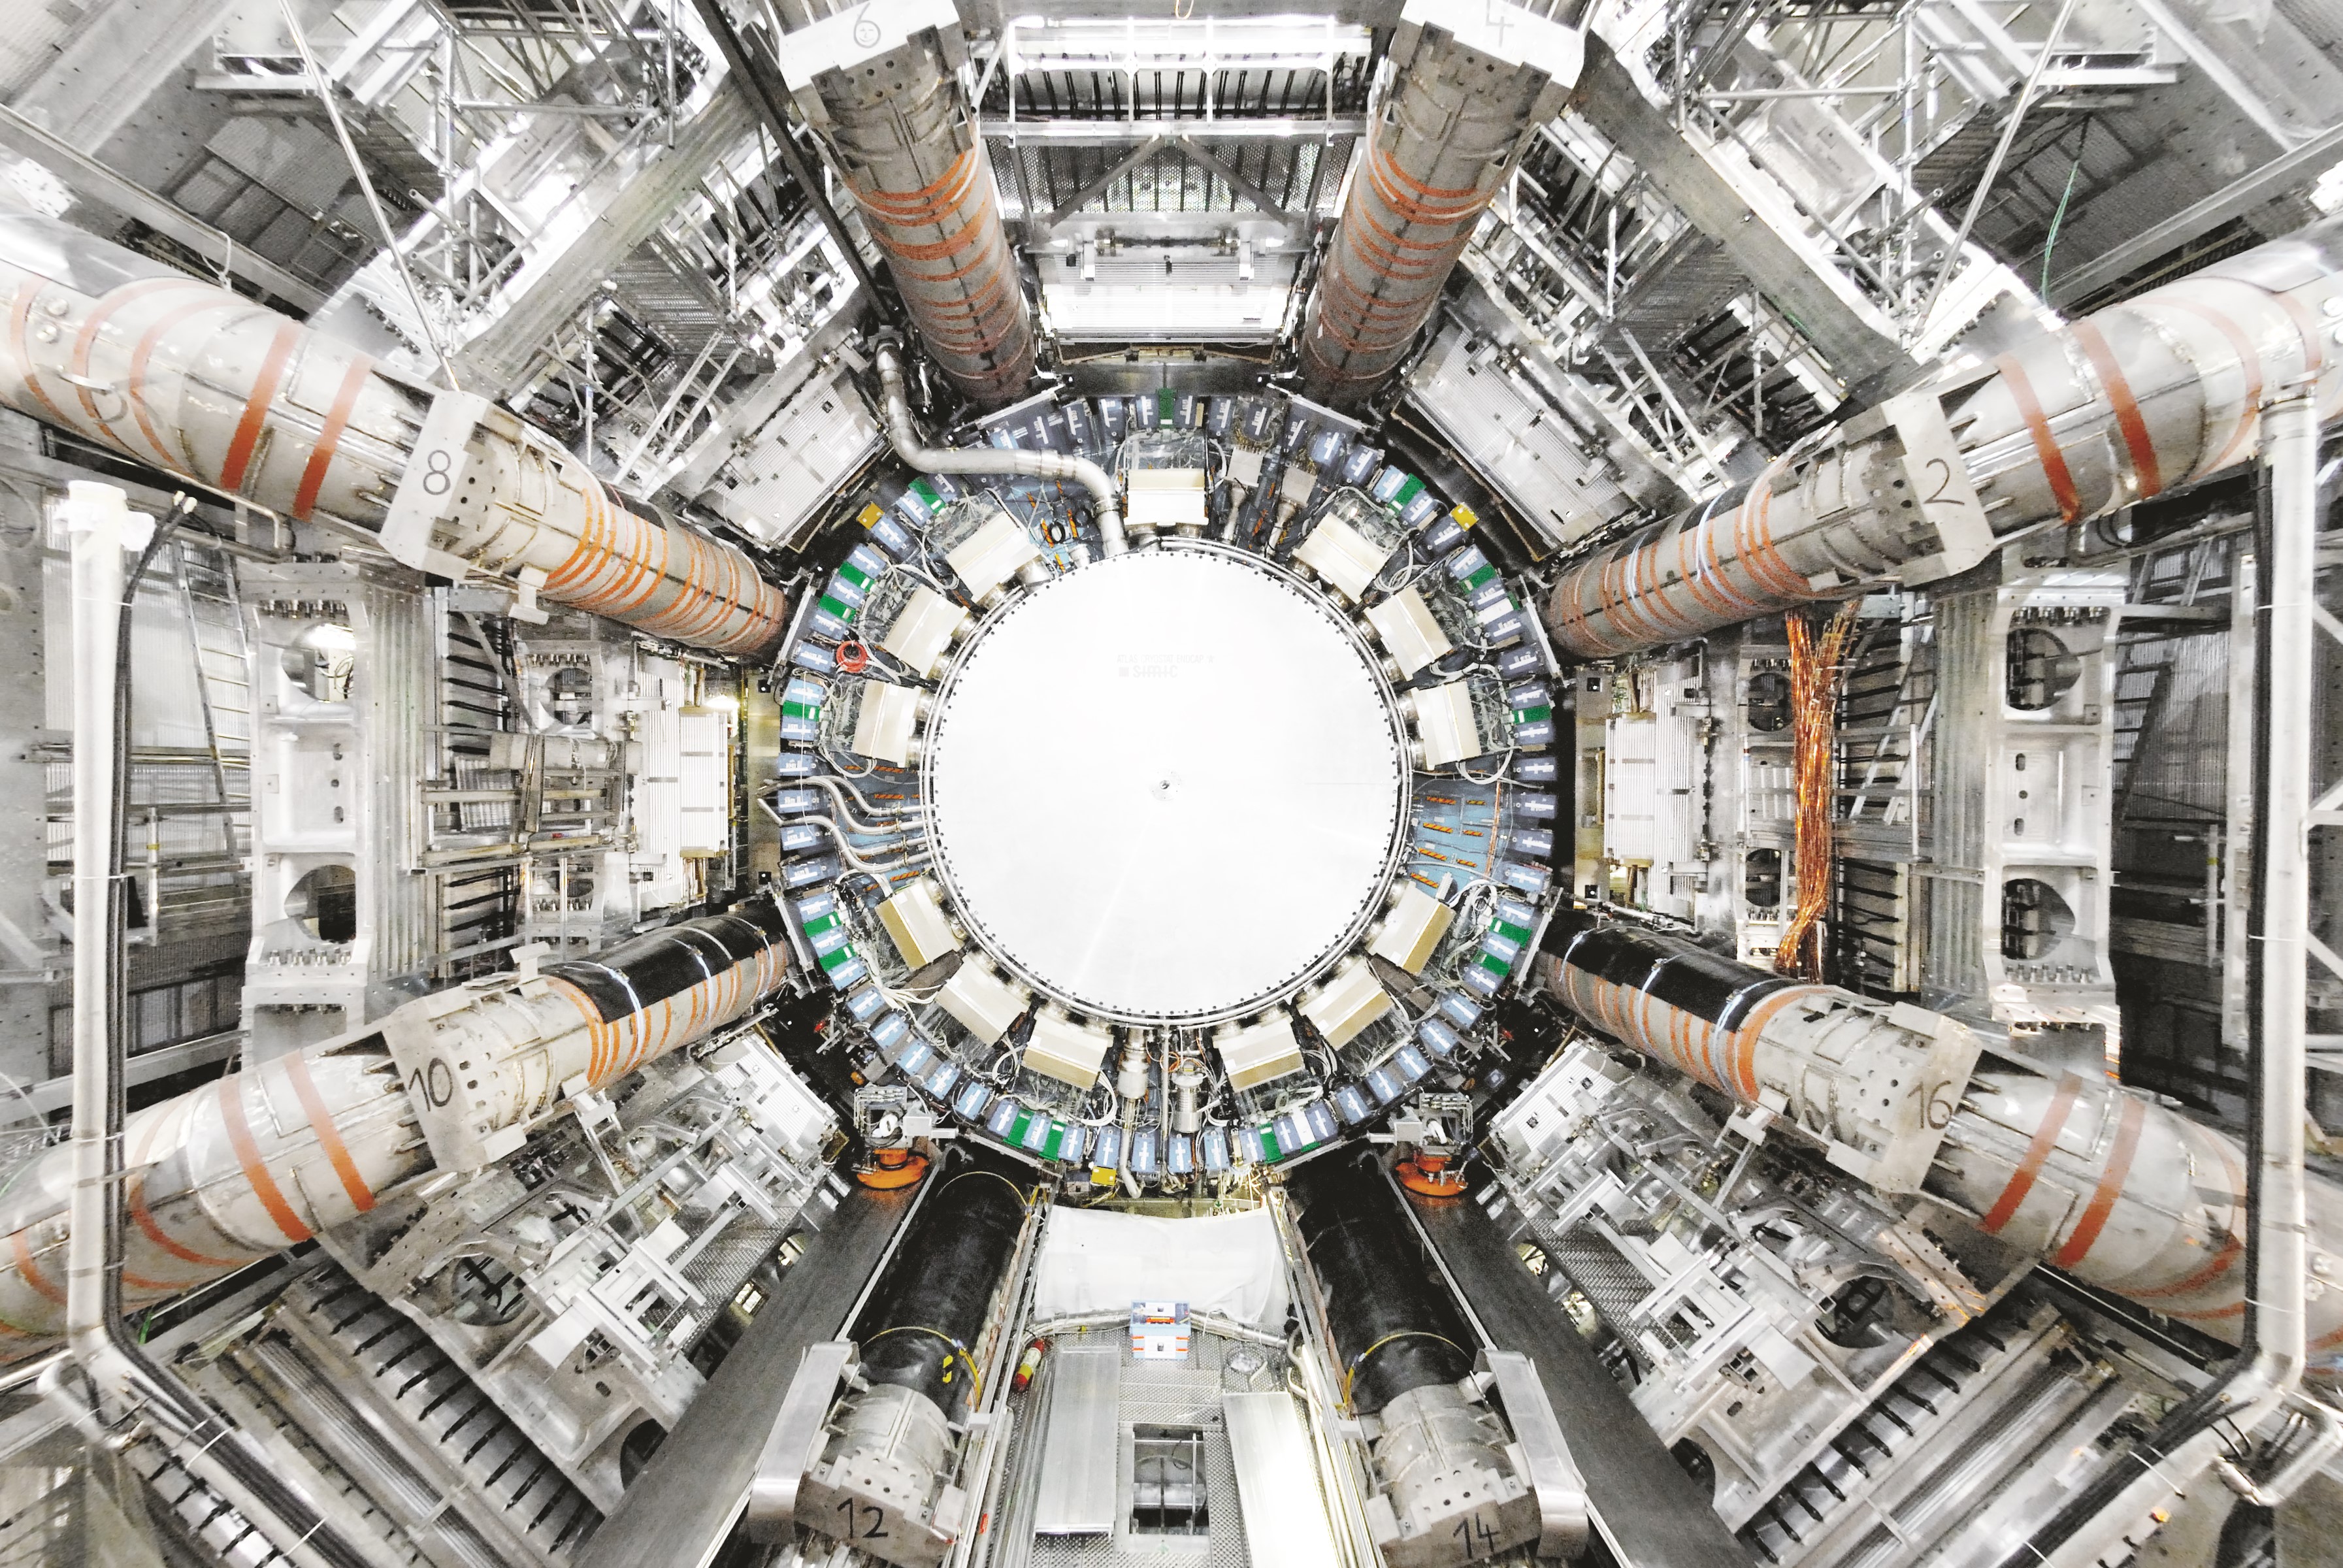 Самая большая частица. ЦЕРН коллайдер. Большой адронный коллайдер ЦЕРН. Большой адронный коллайдер в CERN. Большой адронный коллайдер Atlas.